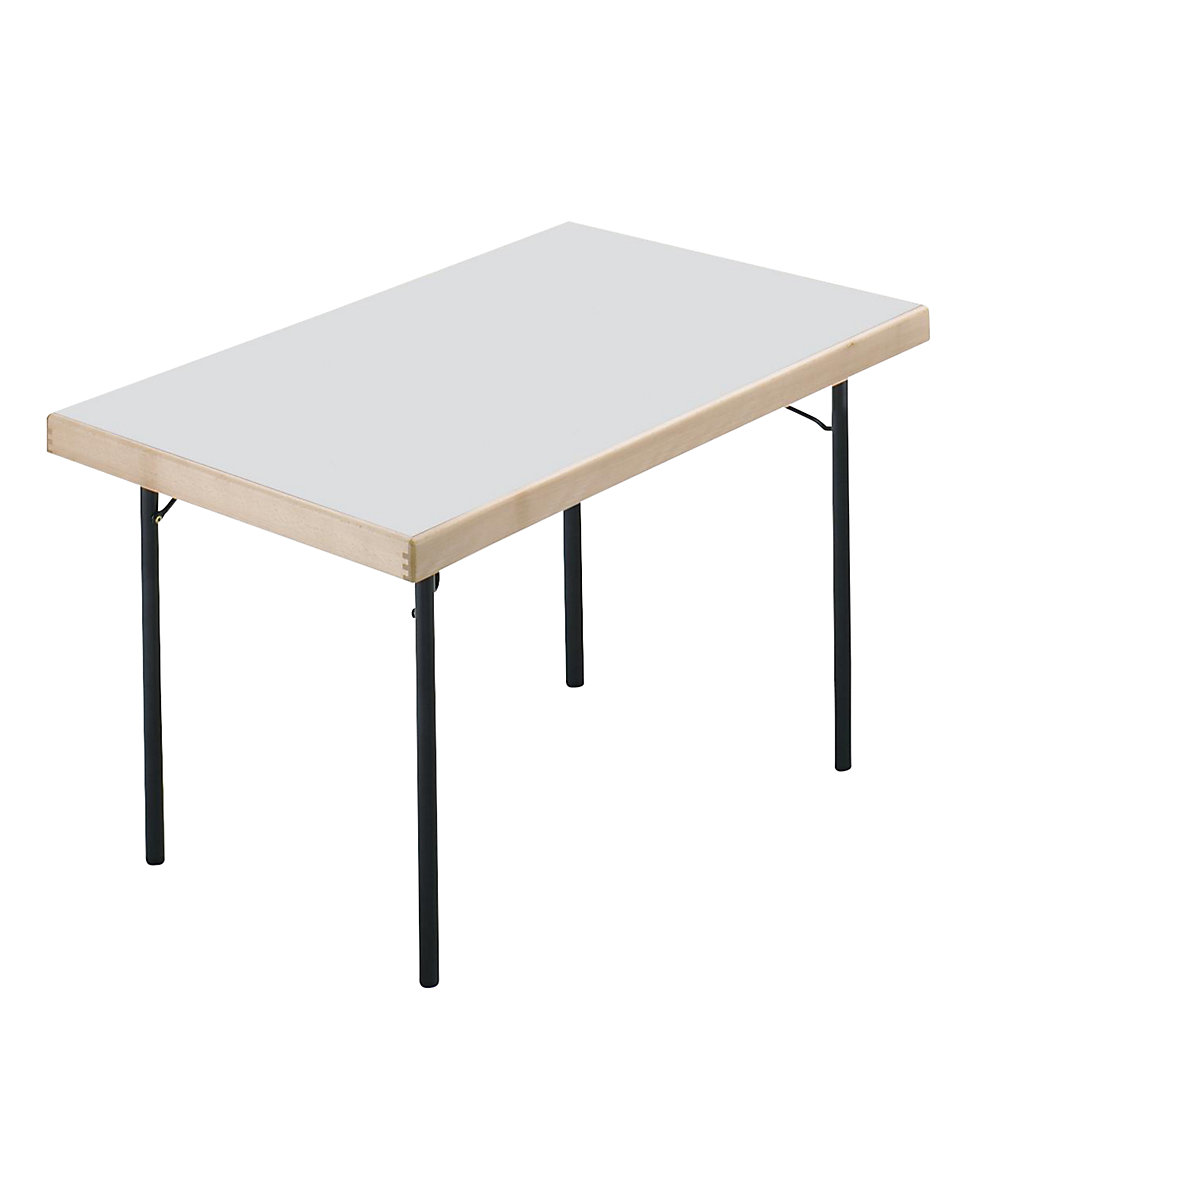 Sklápací stôl, podstavec so 4 nohami, 1200 x 800 mm, podstavec antracitová, doska svetlošedá-12